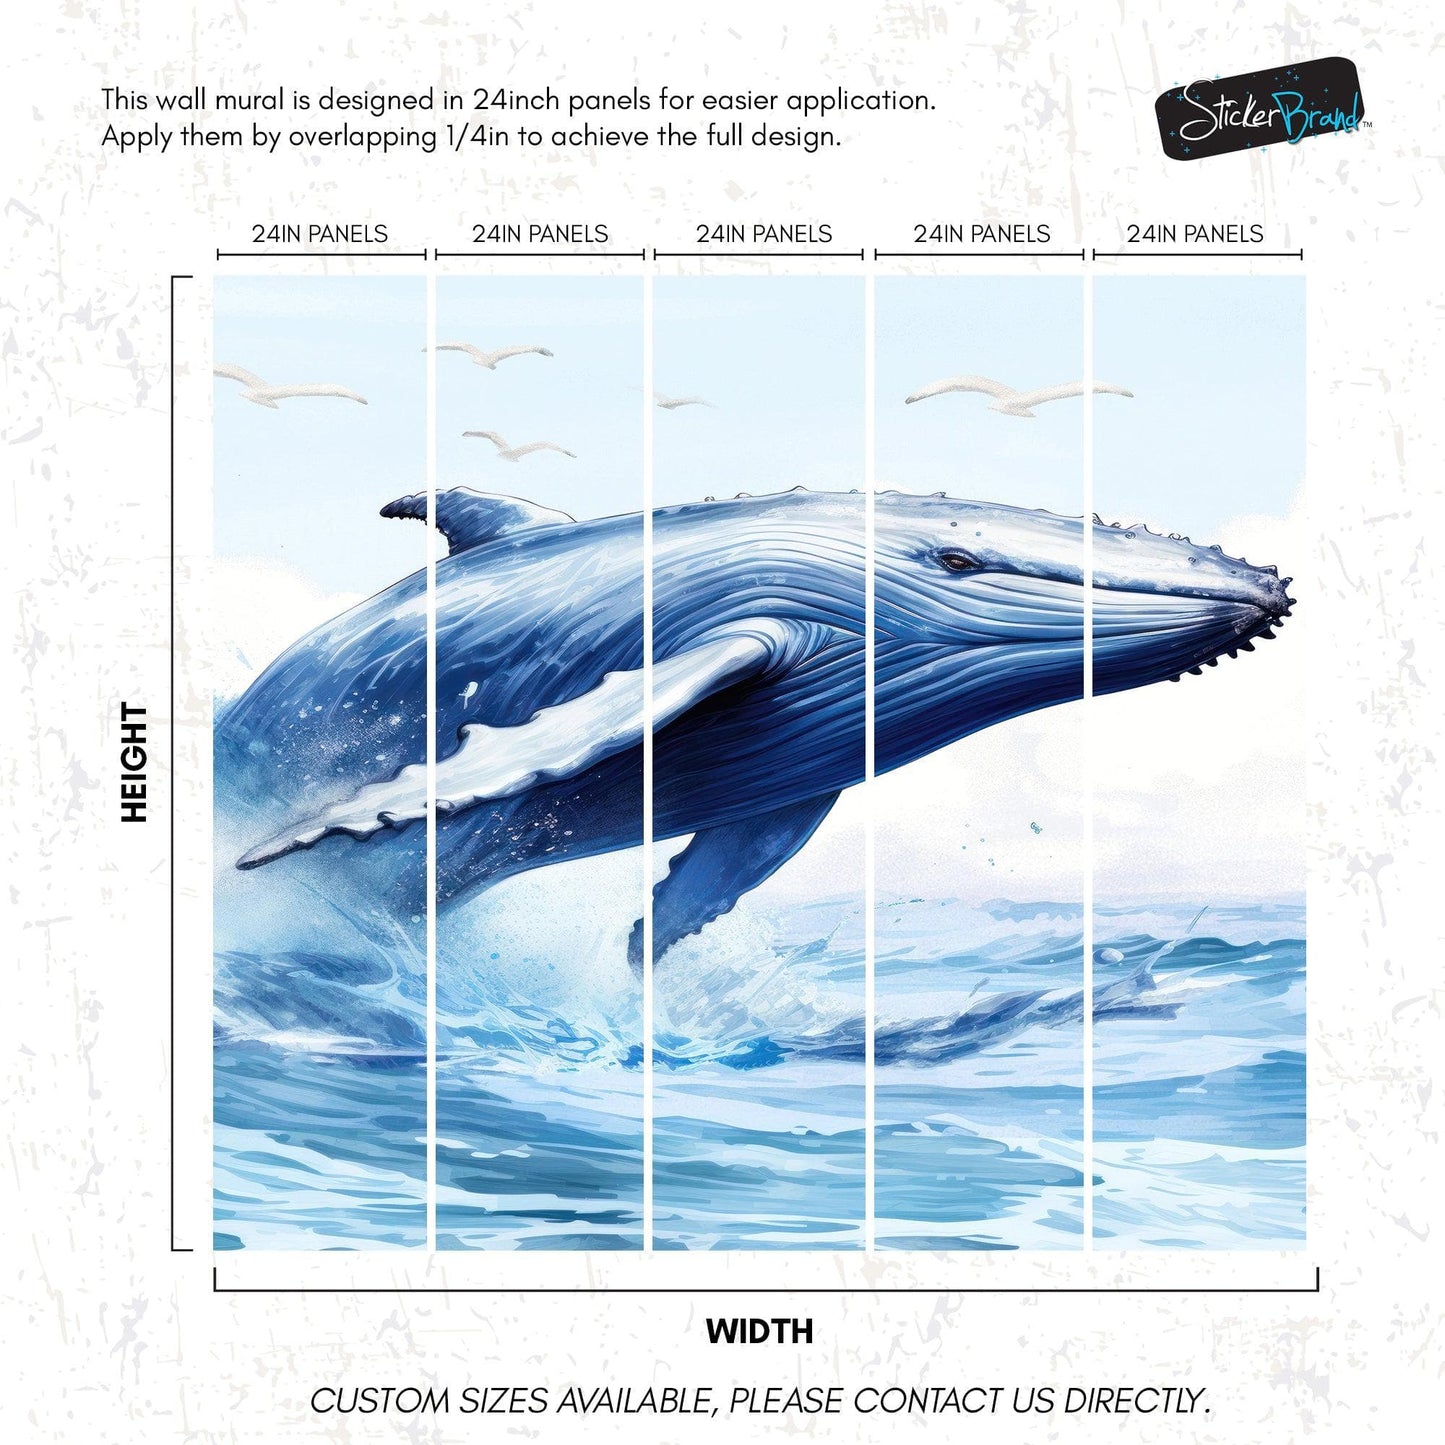 Humpback Whale Wallpaper. Marine Life Wall Art. #6651